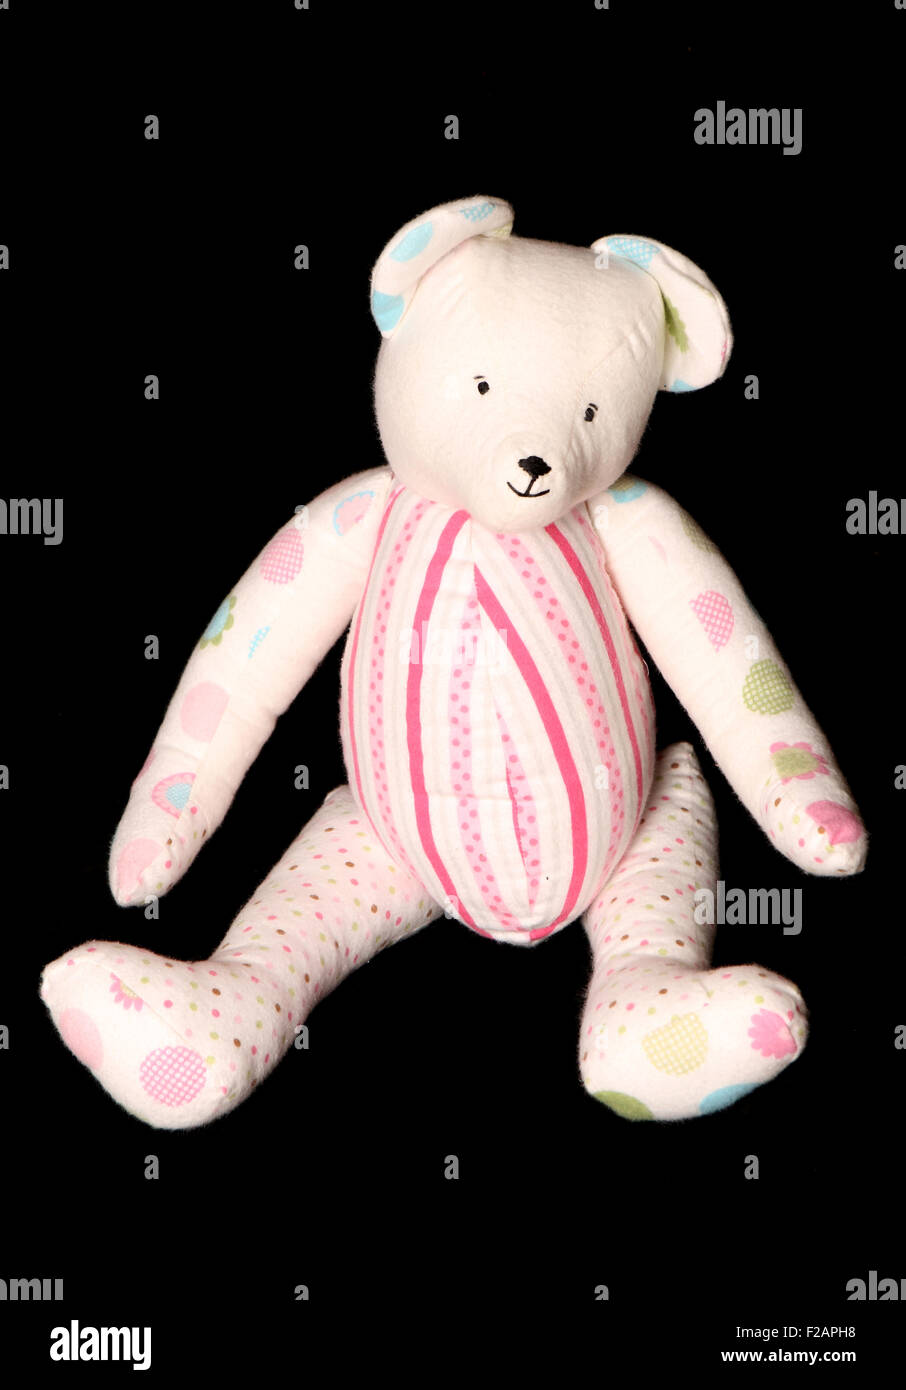 handmade floral teddybear soft toy on black background Stock Photo